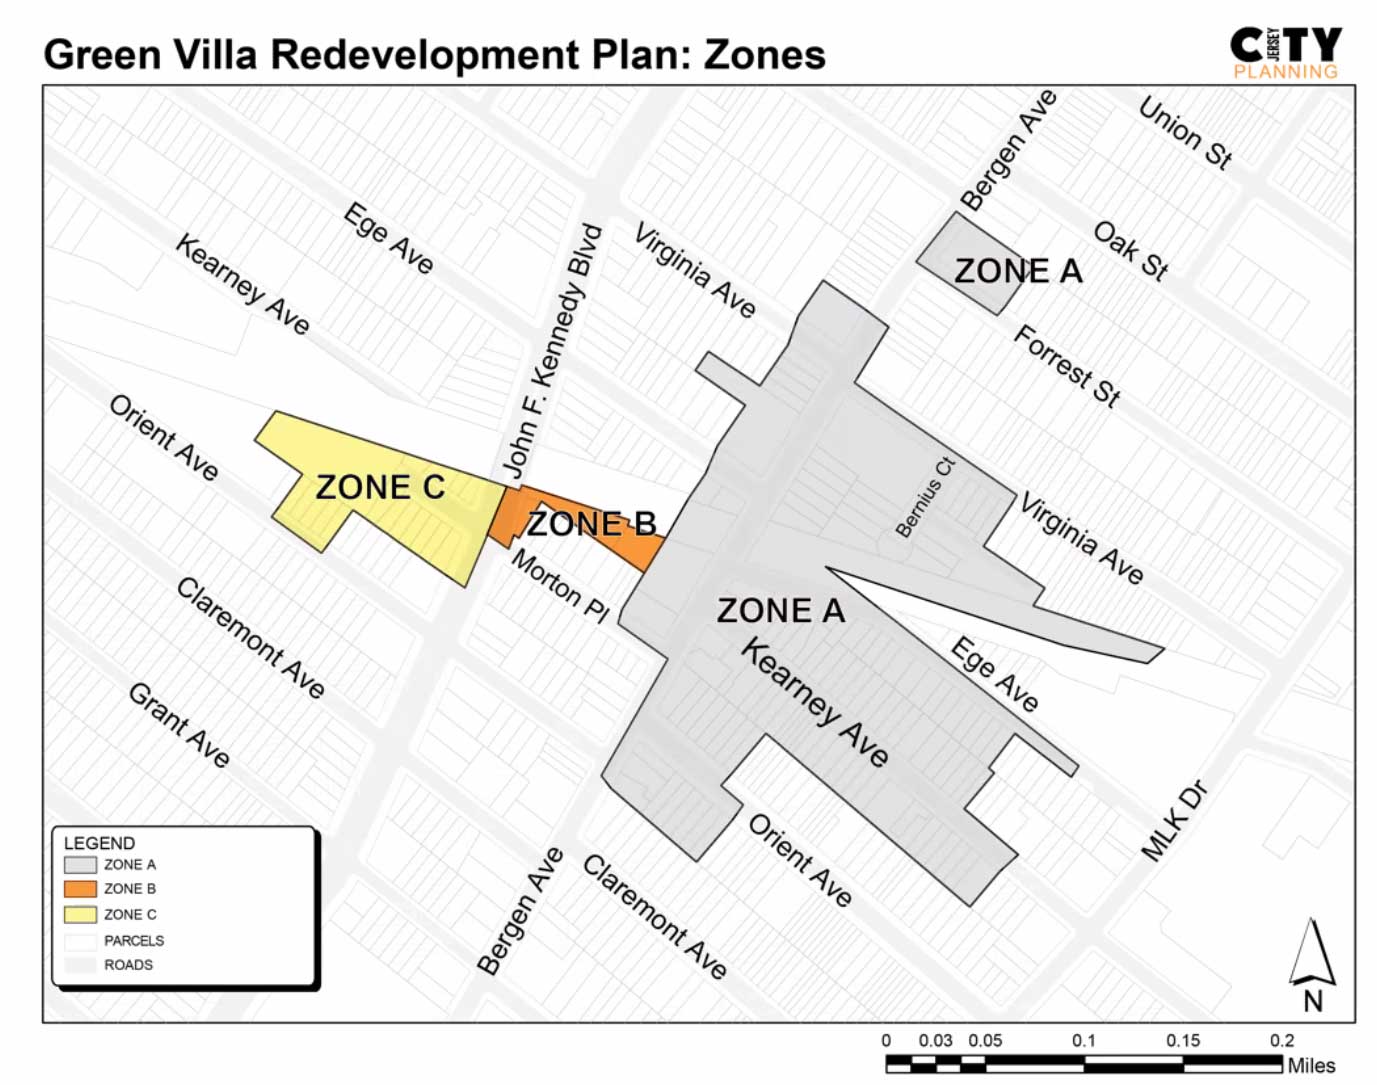 Green Villa Redevelopment Jersey City Zones